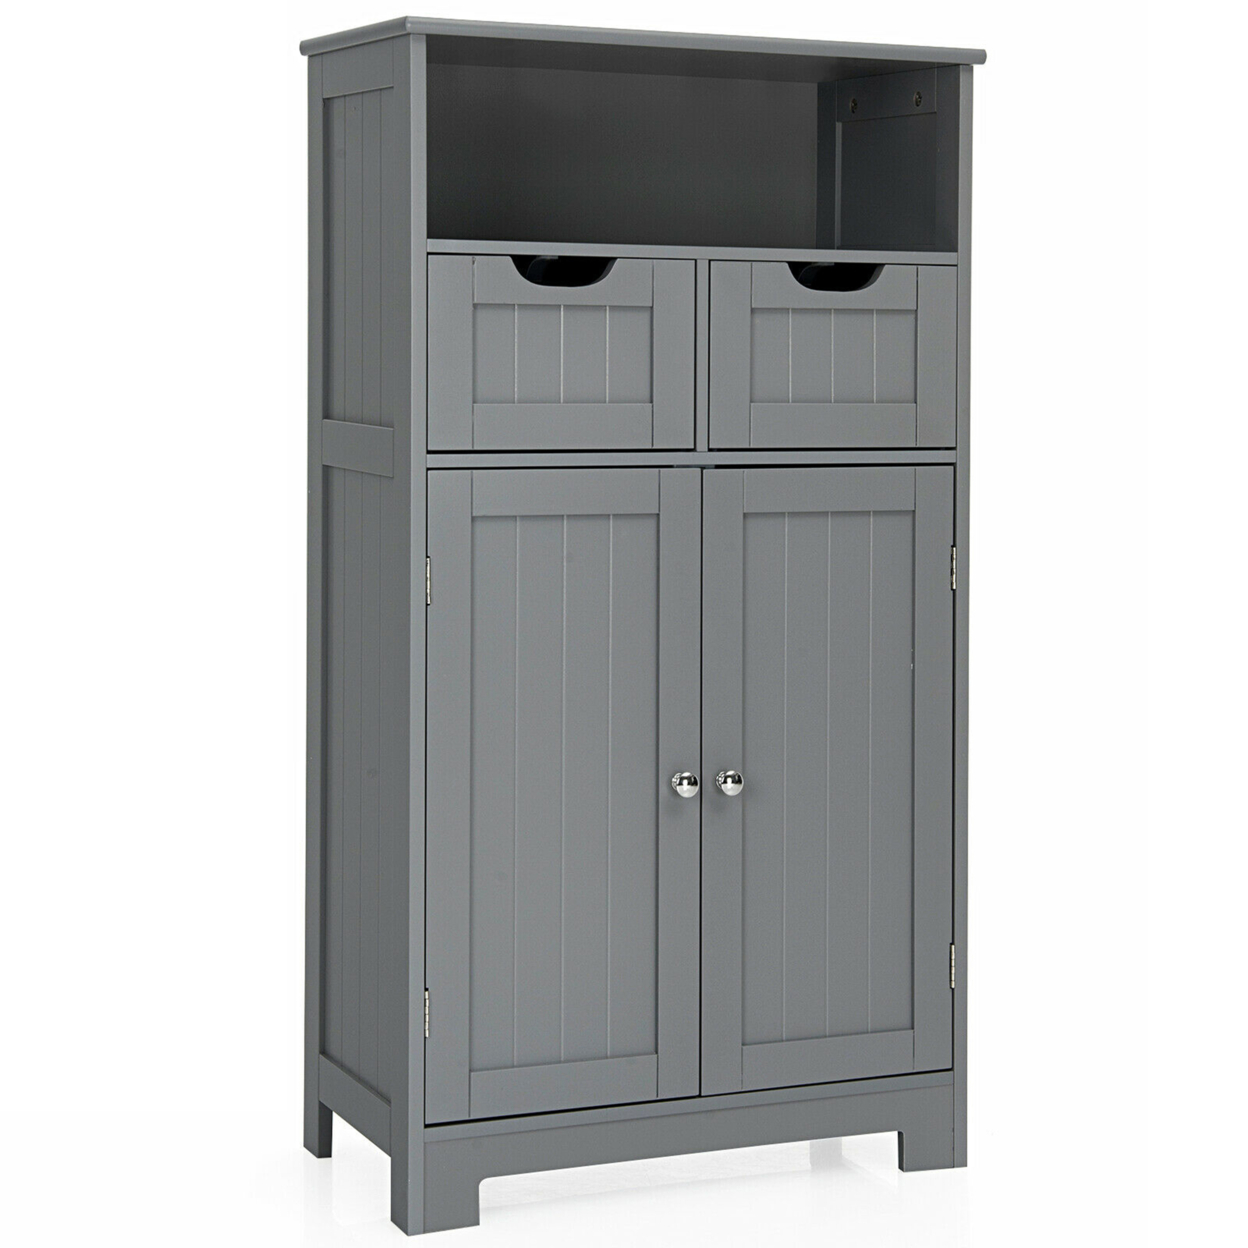 Bathroom Floor Cabinet Wooden Storage Organizer W/Drawer Doors - Grey